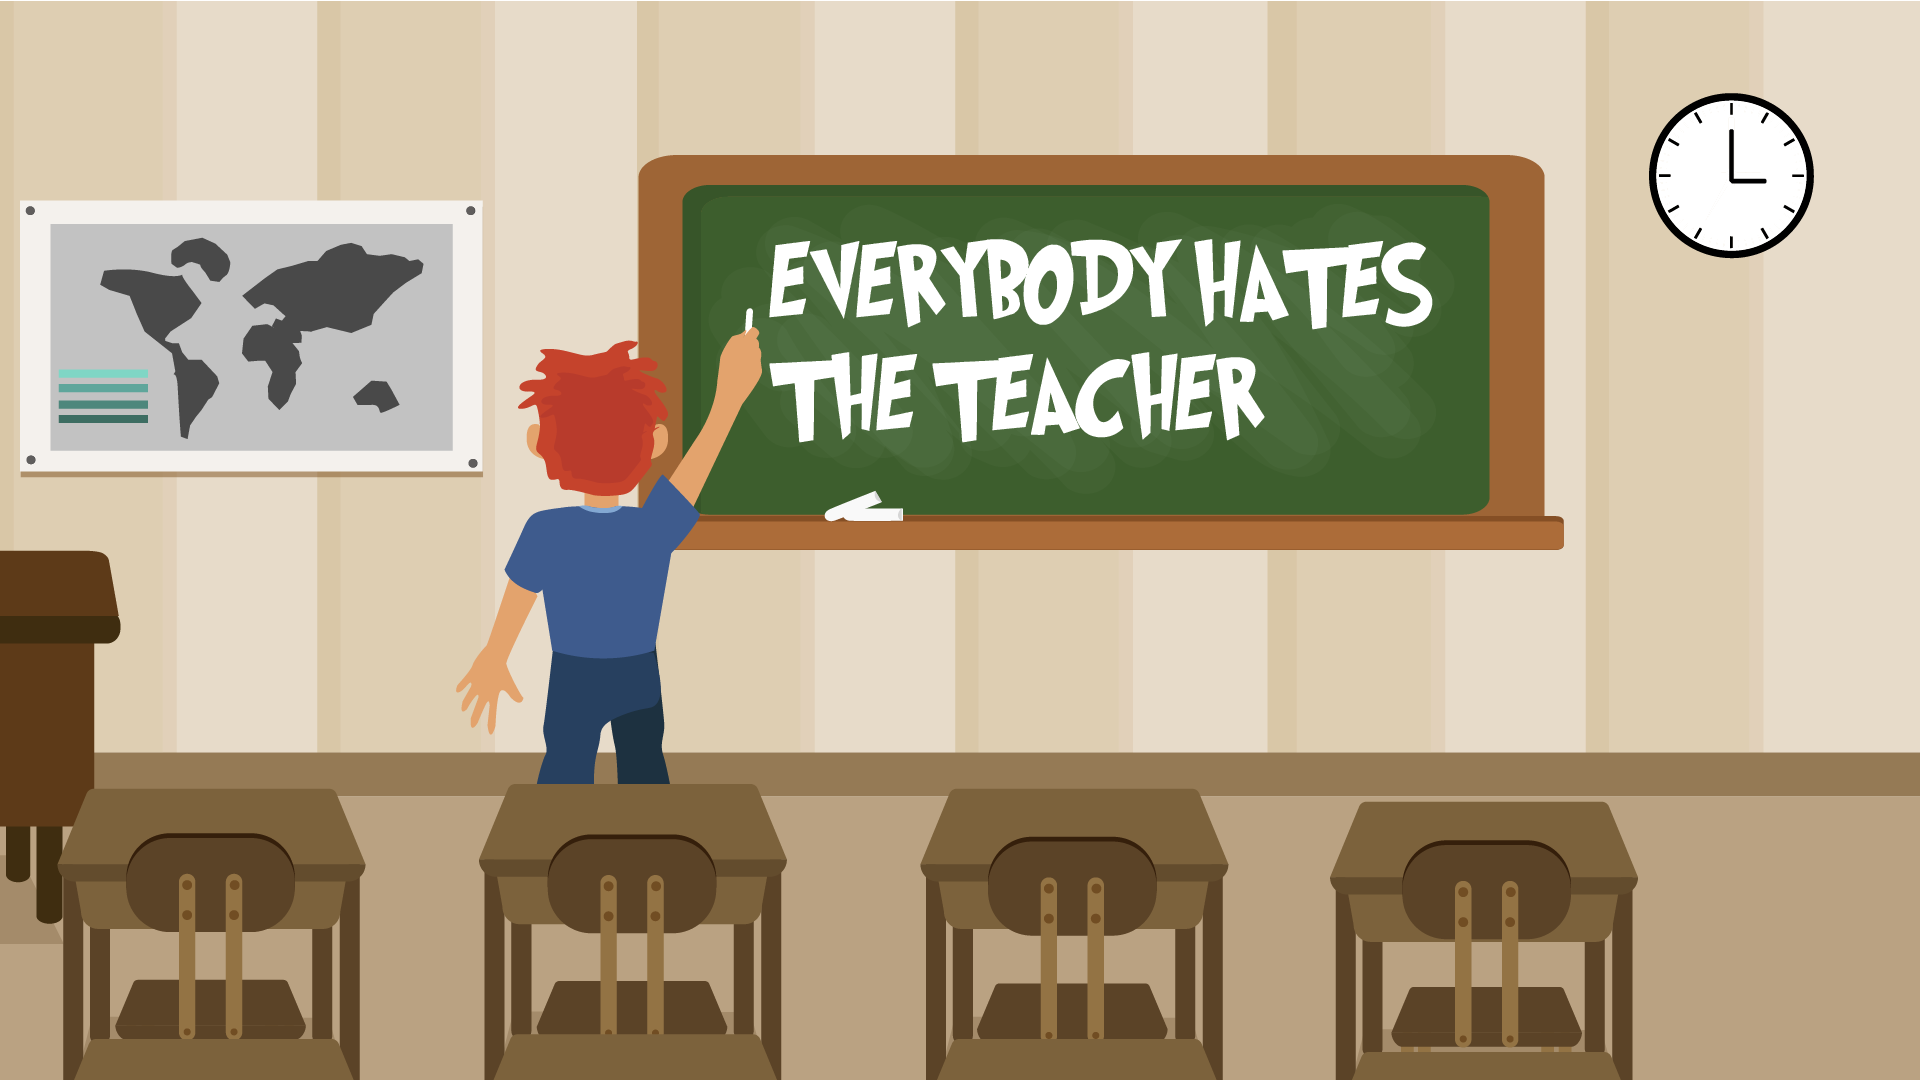 The teacher Law игра. Игра Bash the teacher. The teacher the hates you. Игры том учитель